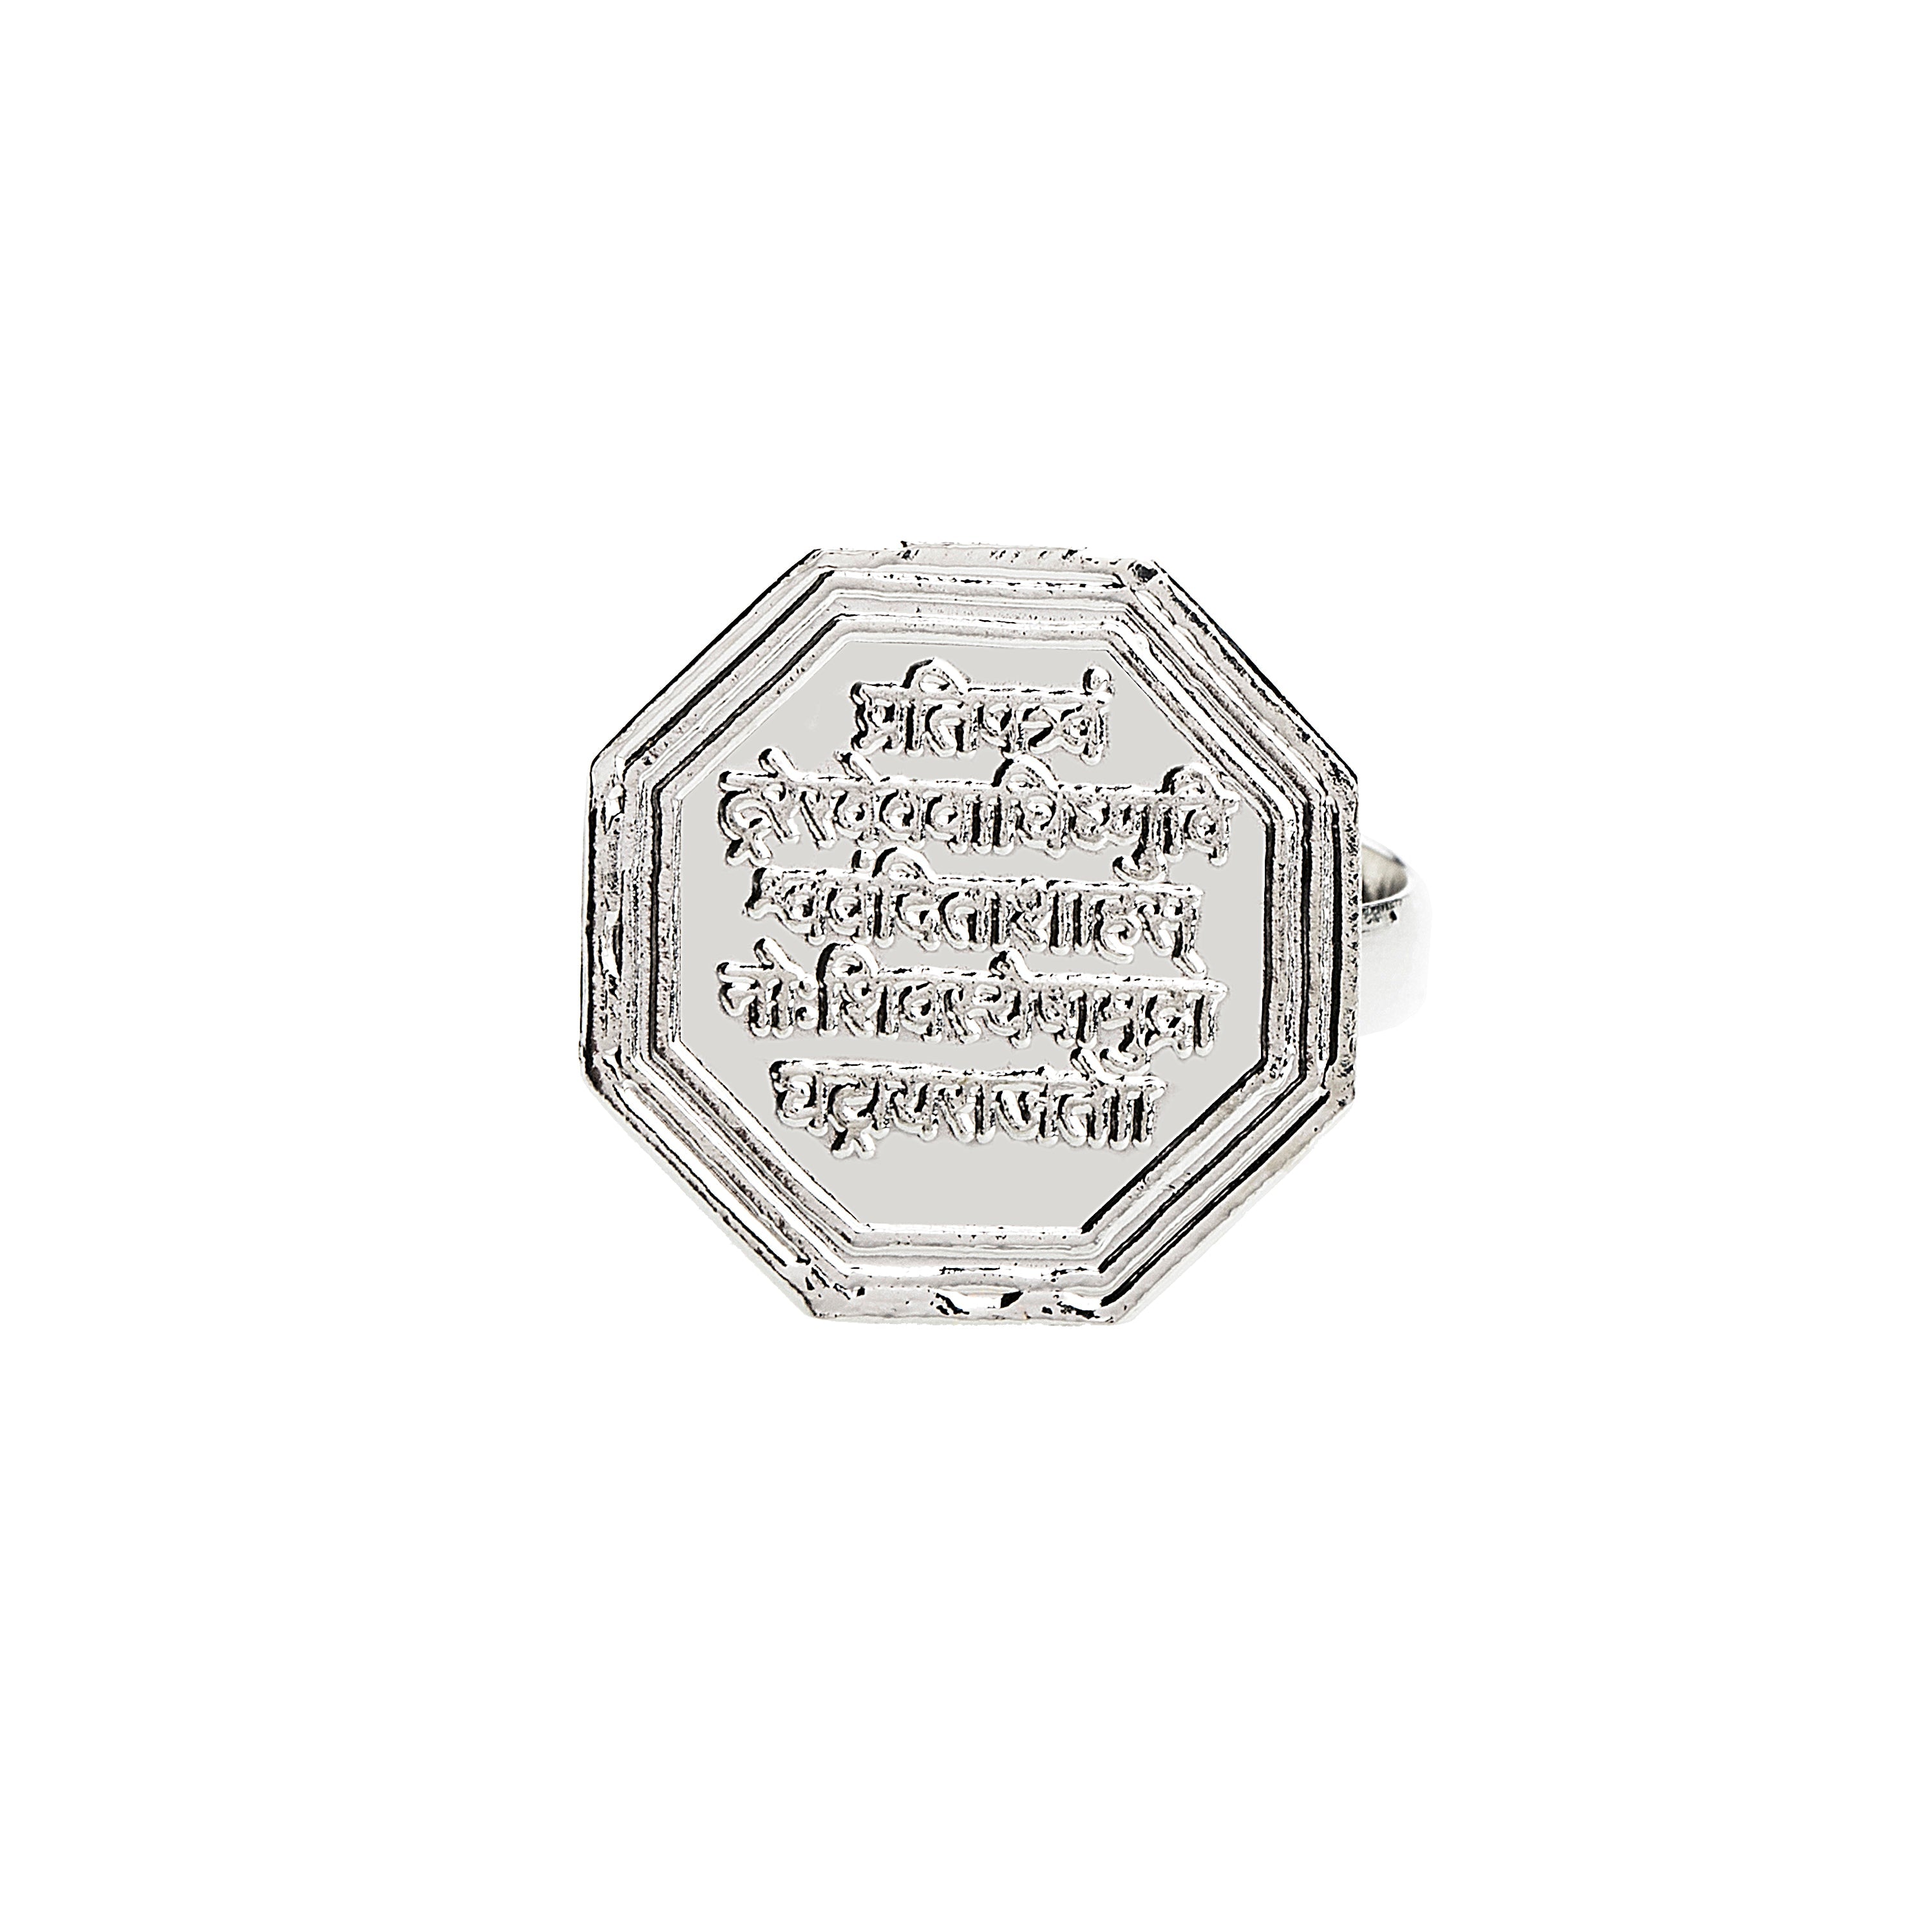 Buy Morir Silver Plated Rajmudra The Royal Seal of Shivaji Maharaj  Adjustable Free Size Ring Finger Jewelry for MenWomen at Amazonin